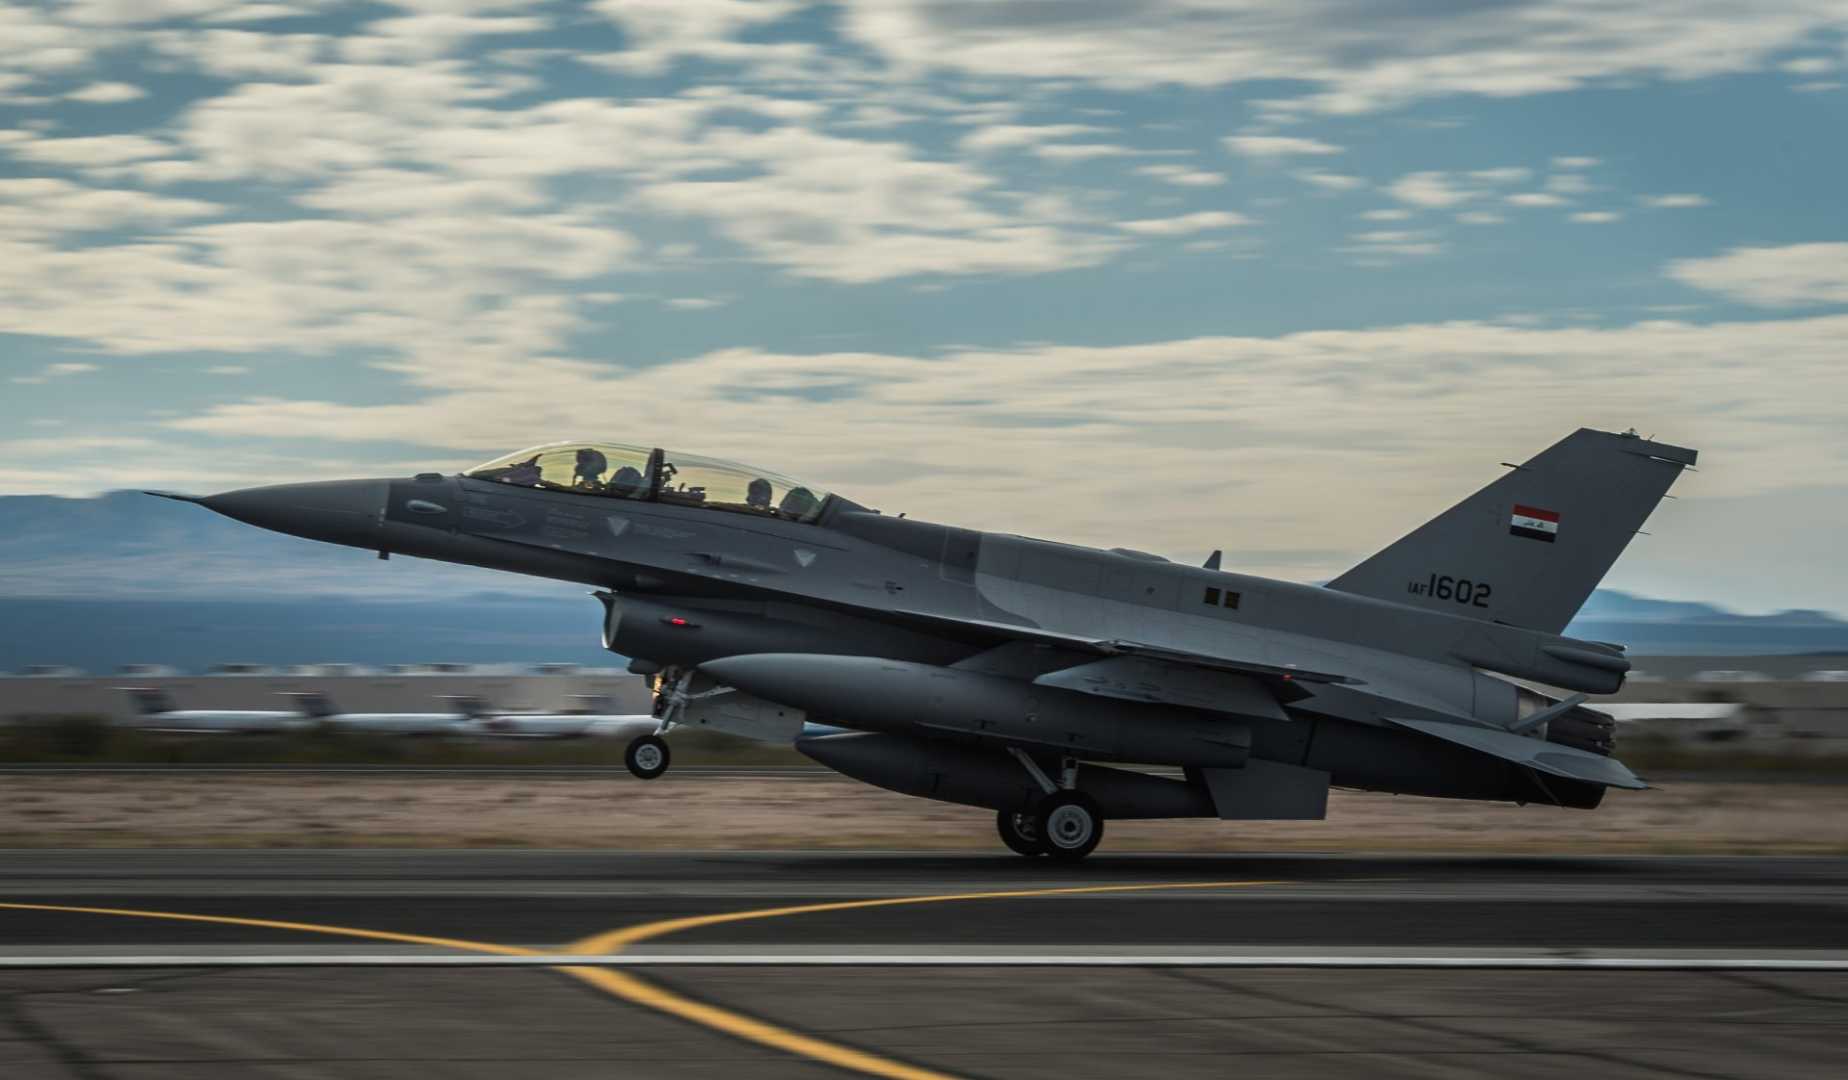 Iraq's F-16 Fighting Falcon aircraft